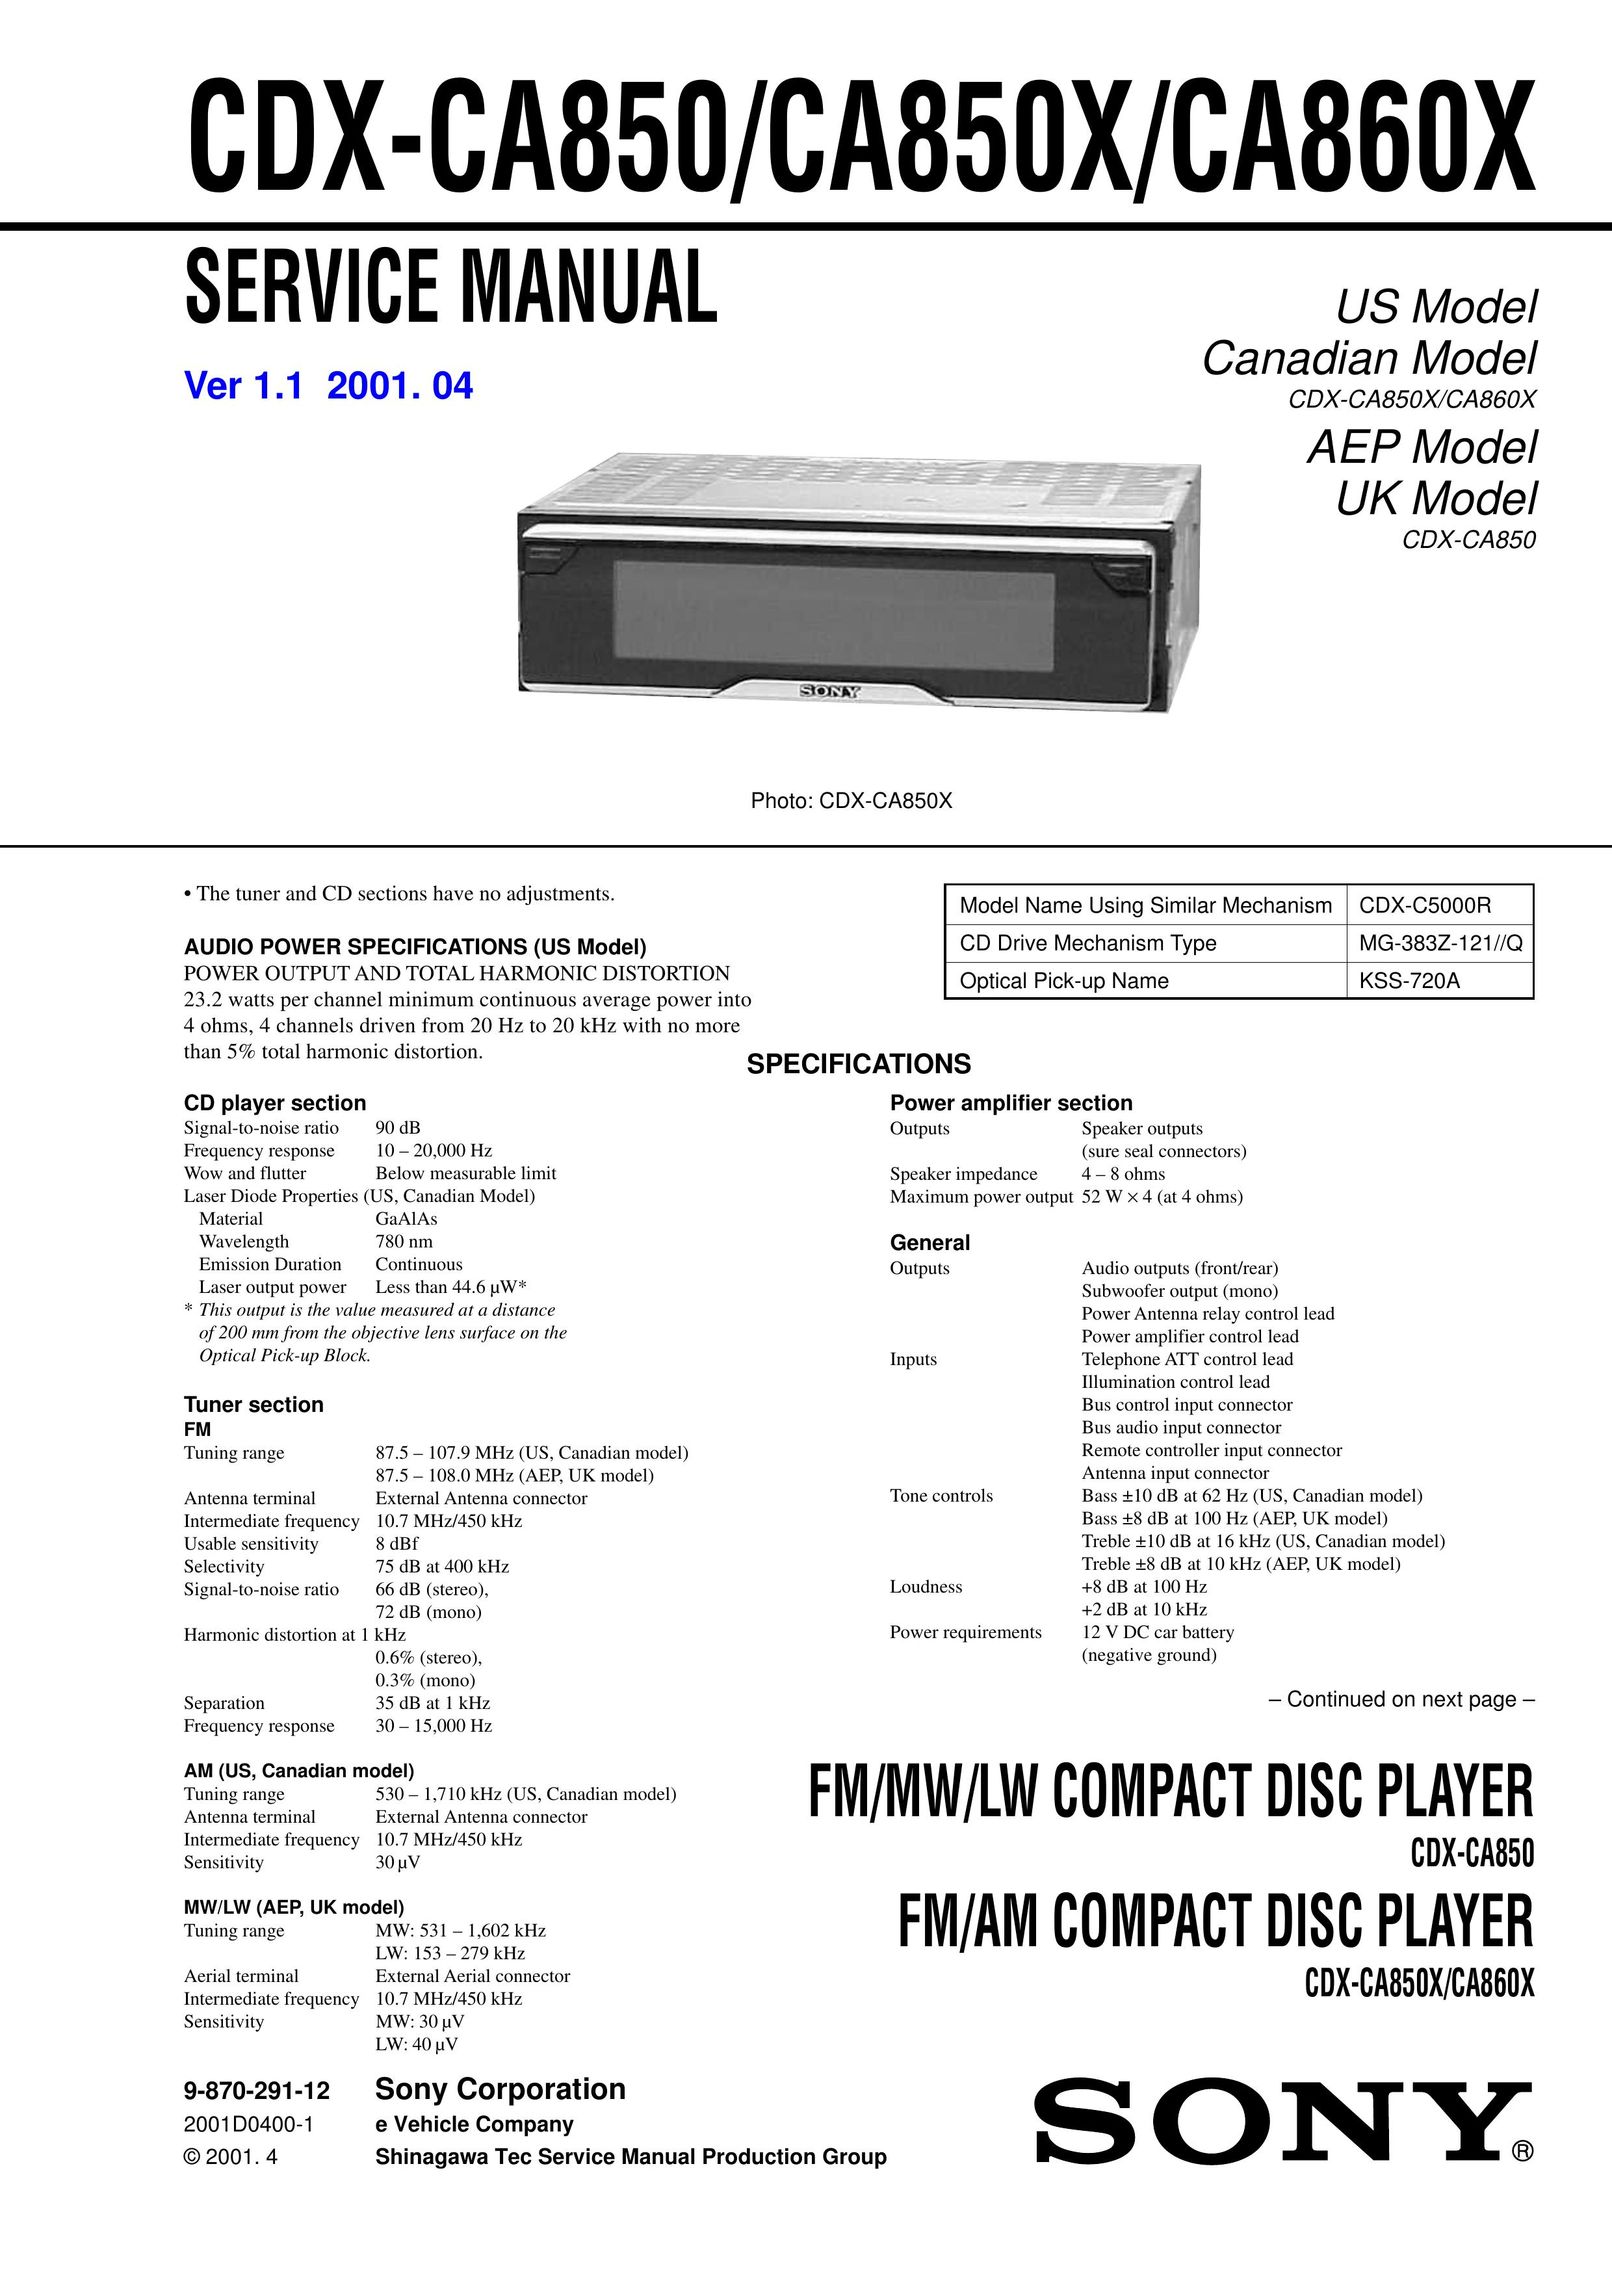 Sony Ericsson CDX-CA860X CD Player User Manual